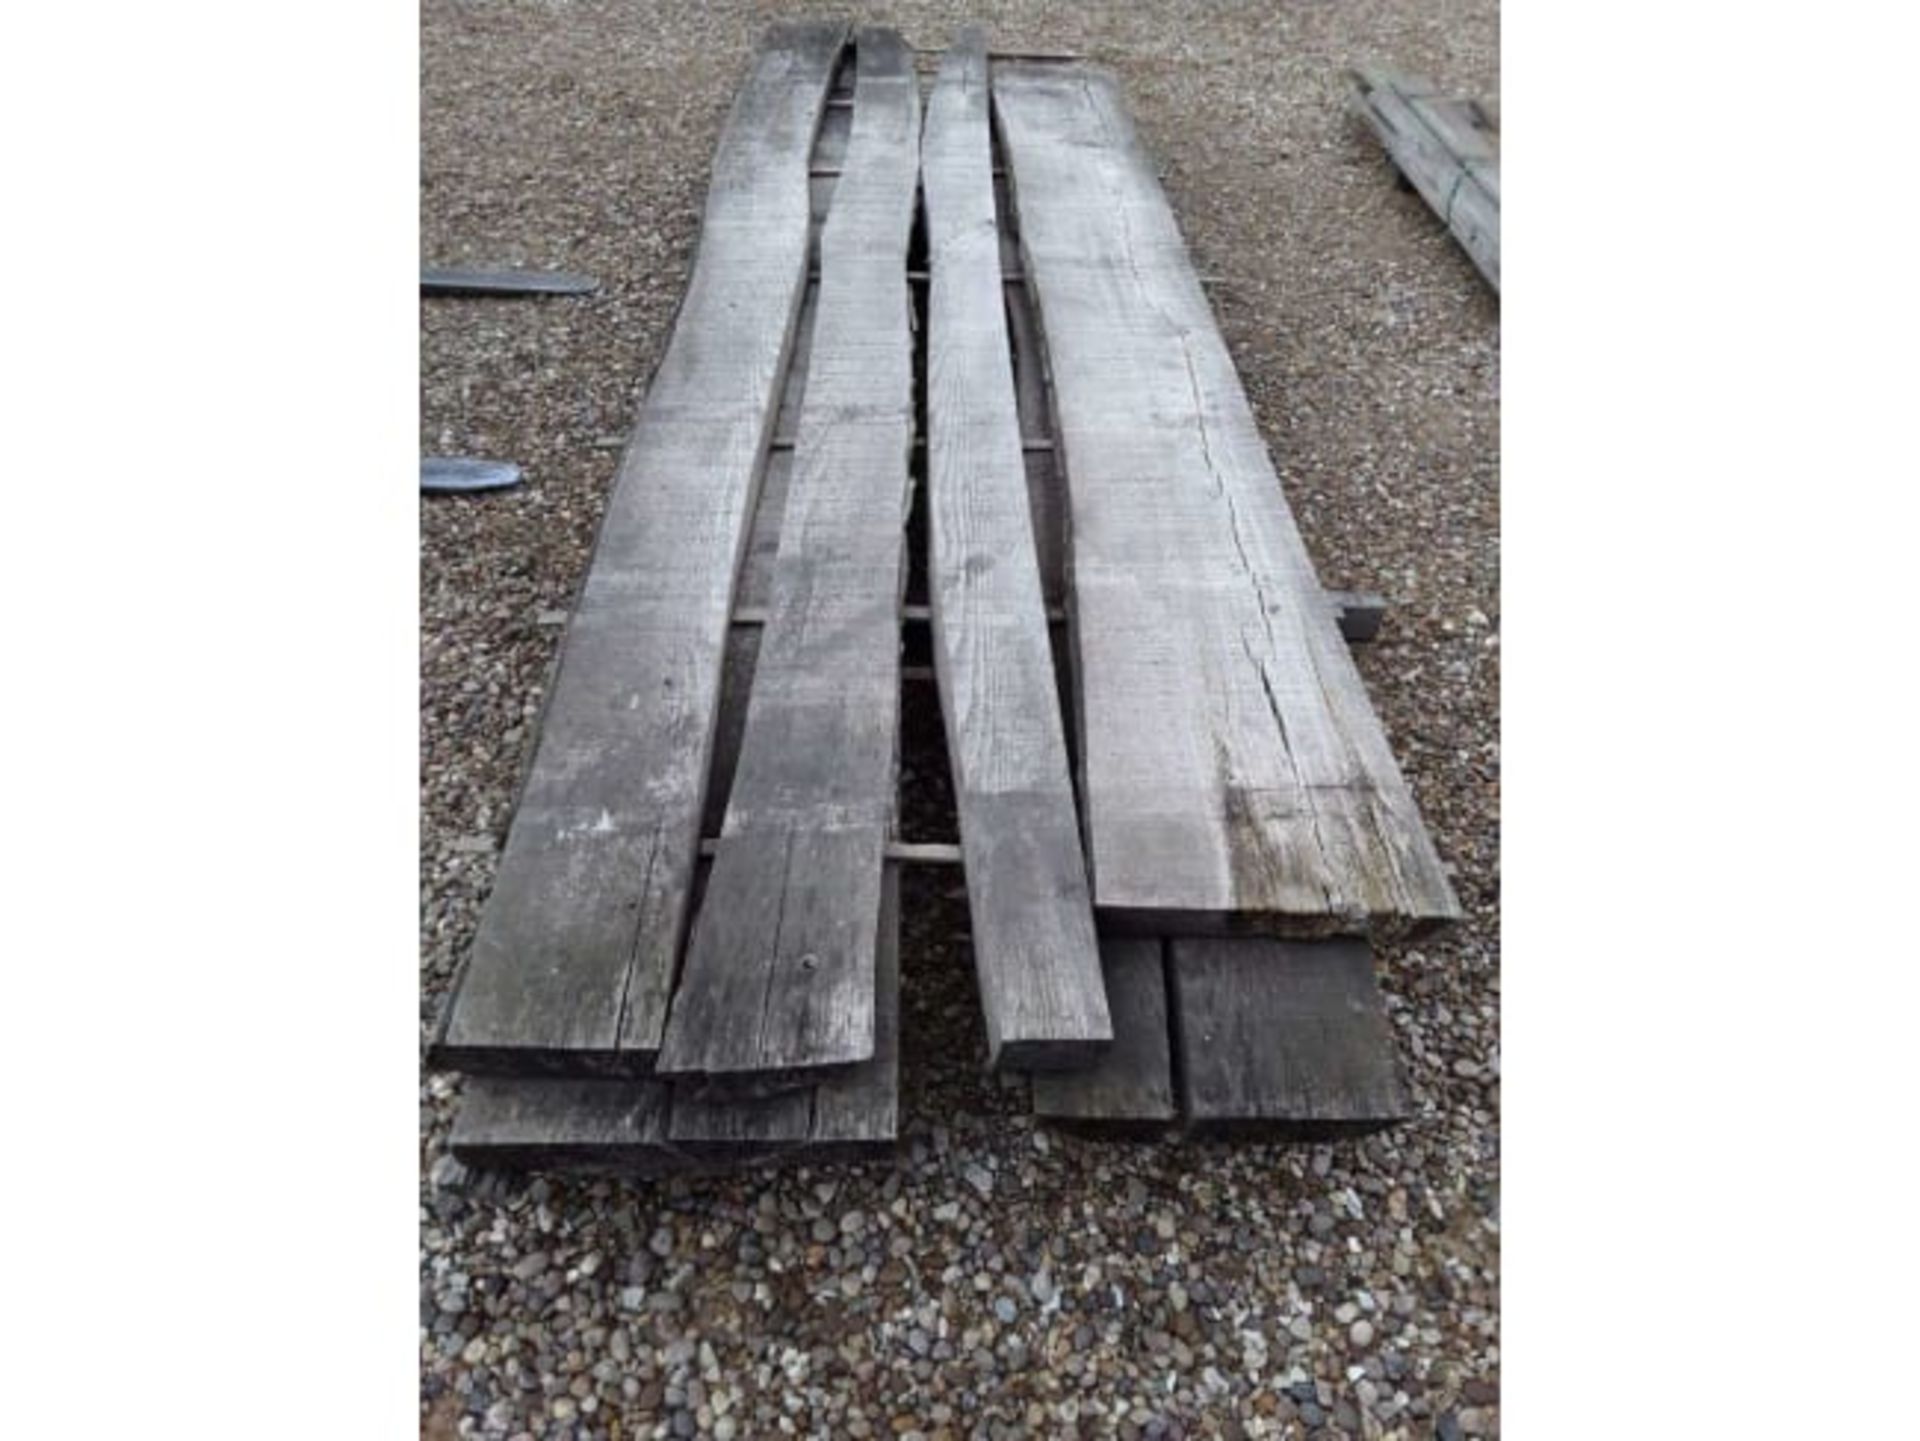 8 x Hardwood Air Dried Sawn English Oak Waney Edge/ Live Edge Timber Boards / Slabs - Image 2 of 5